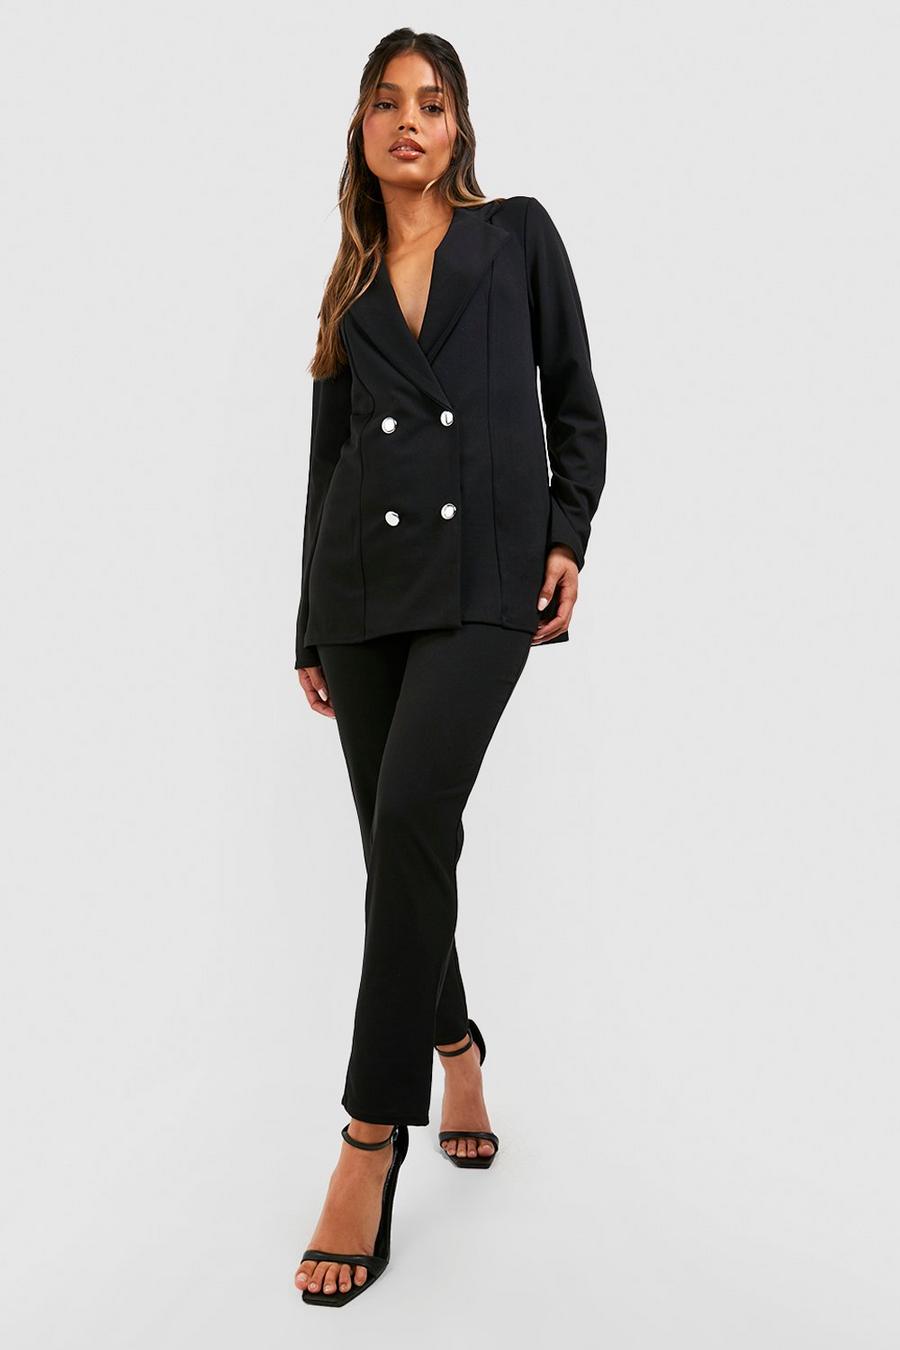 Black noir Double Breasted Blazer And Trouser Suit Set